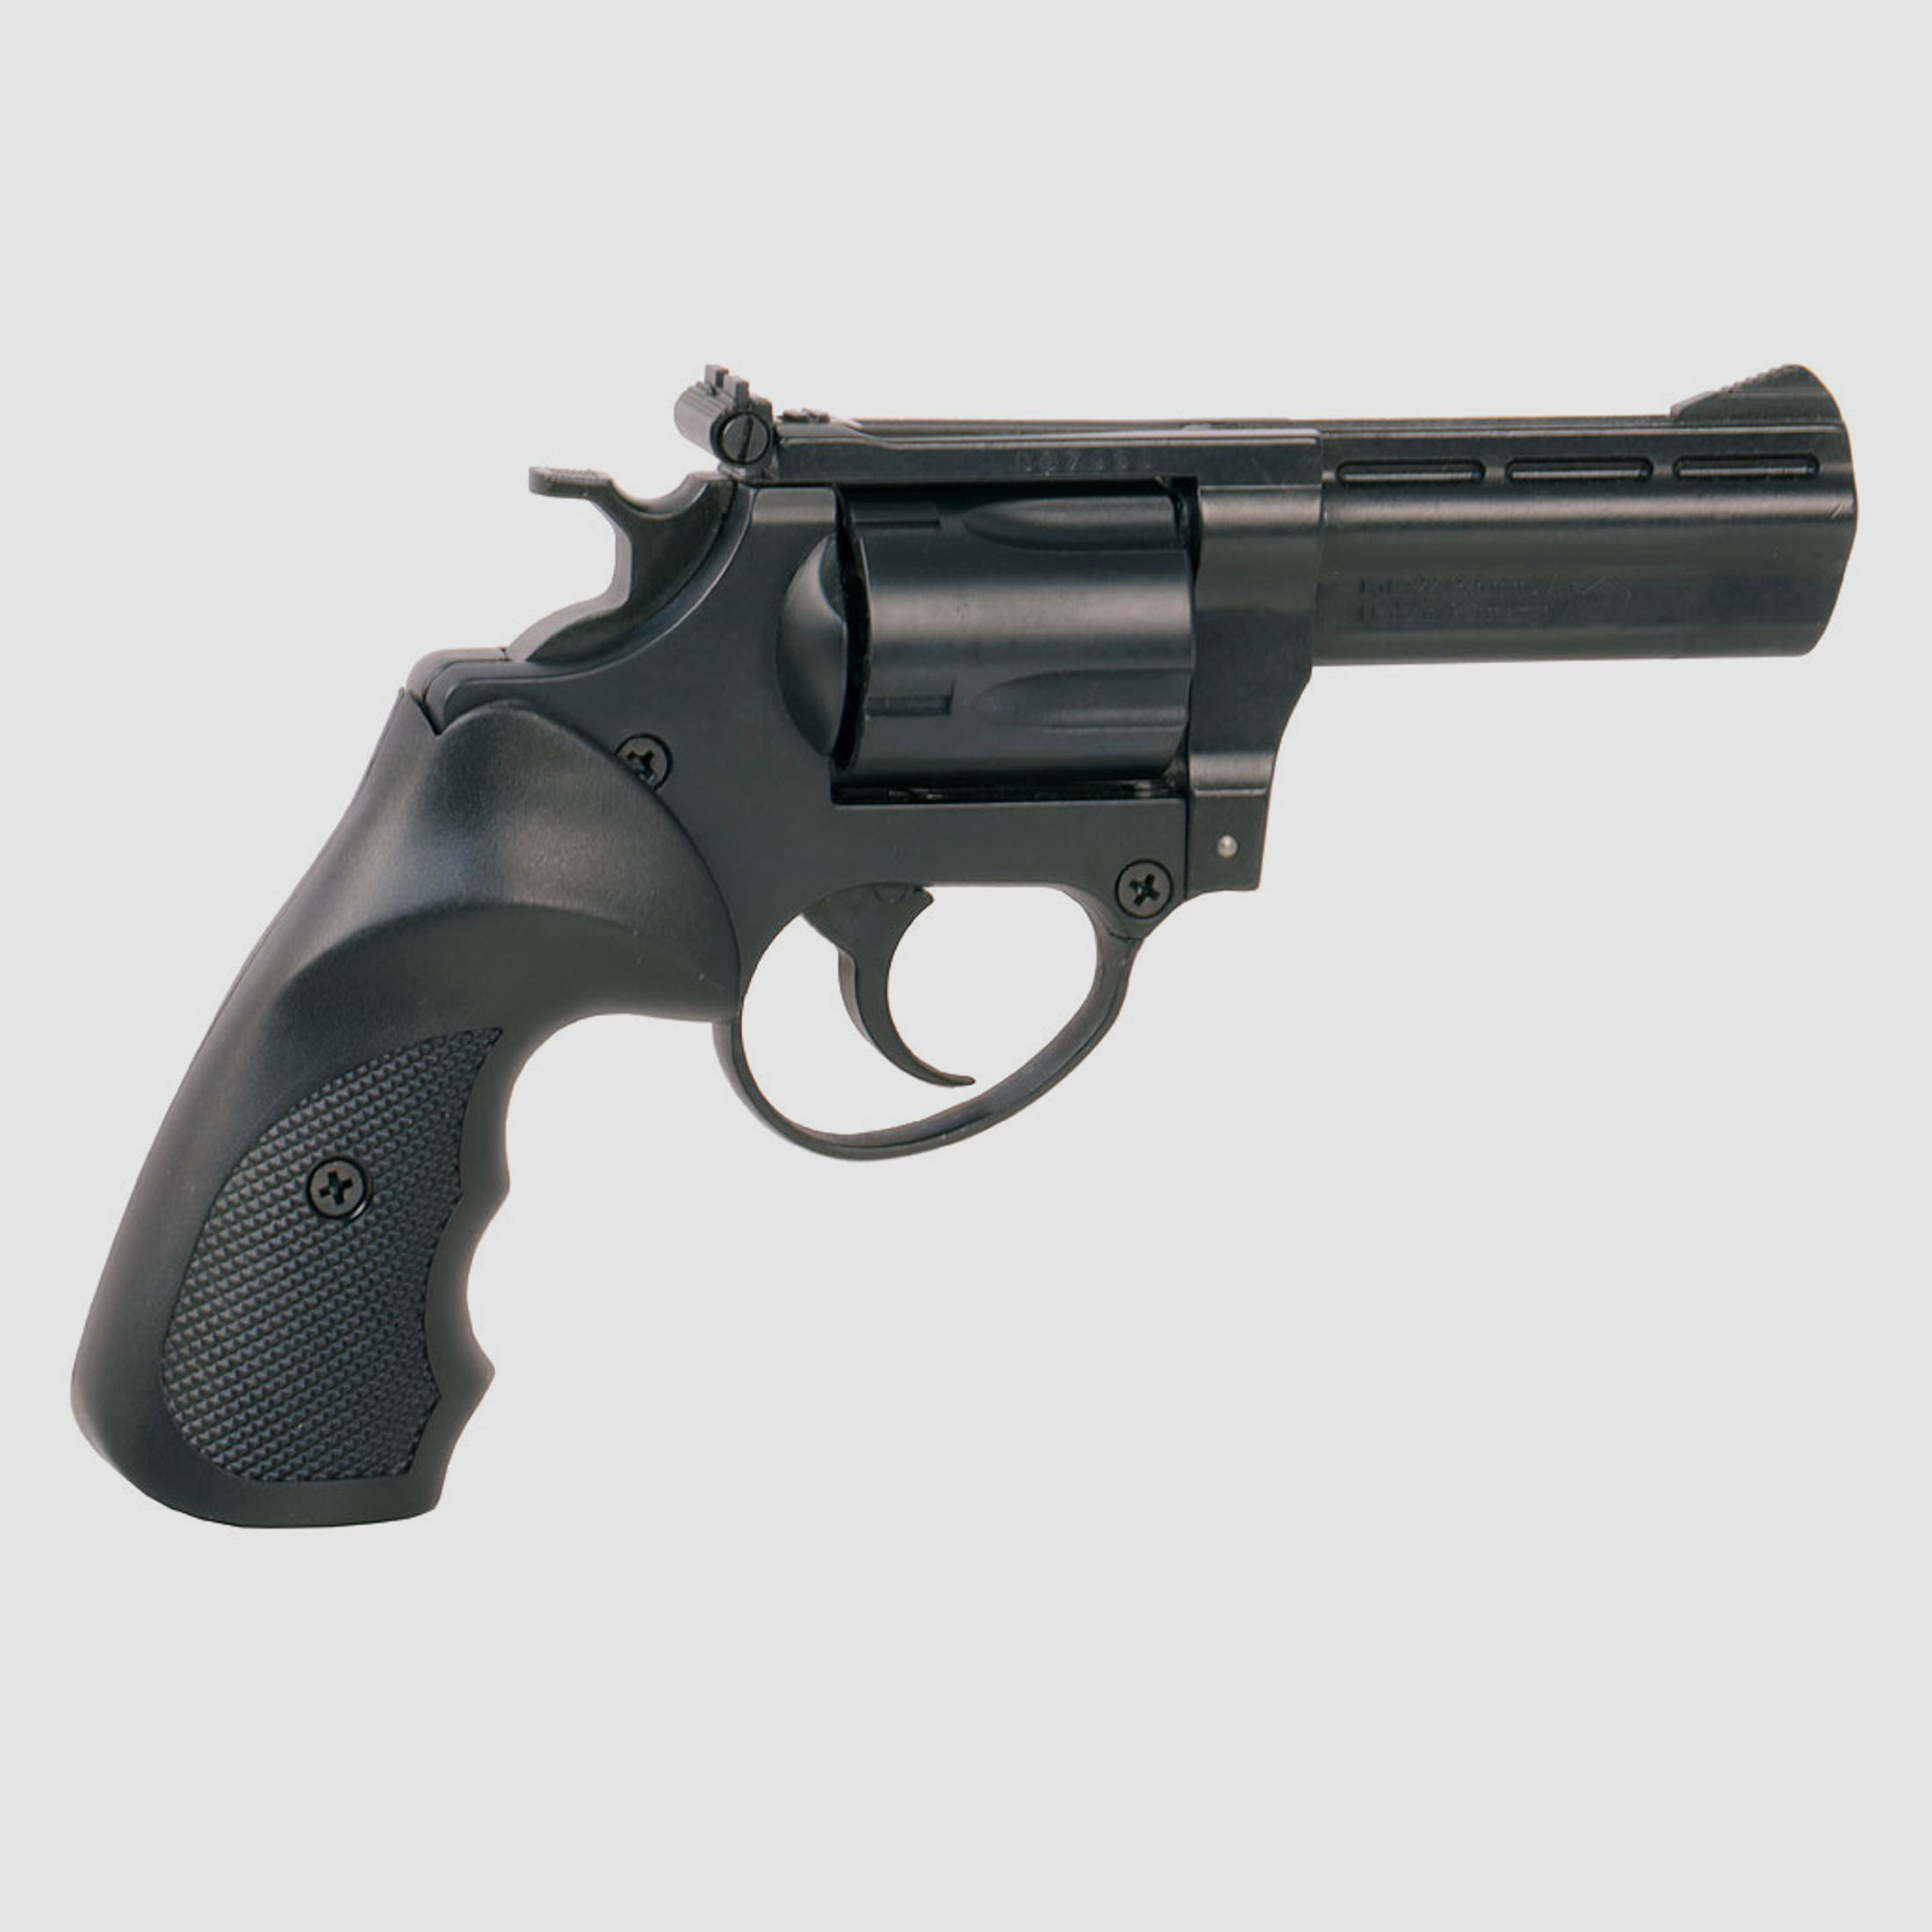 LEP Druckluft Revolver ME 38 Magnum brĂĽniert Kaliber 5,5 mm (P18)+ Handpumpe LEP Patronen Diabolos